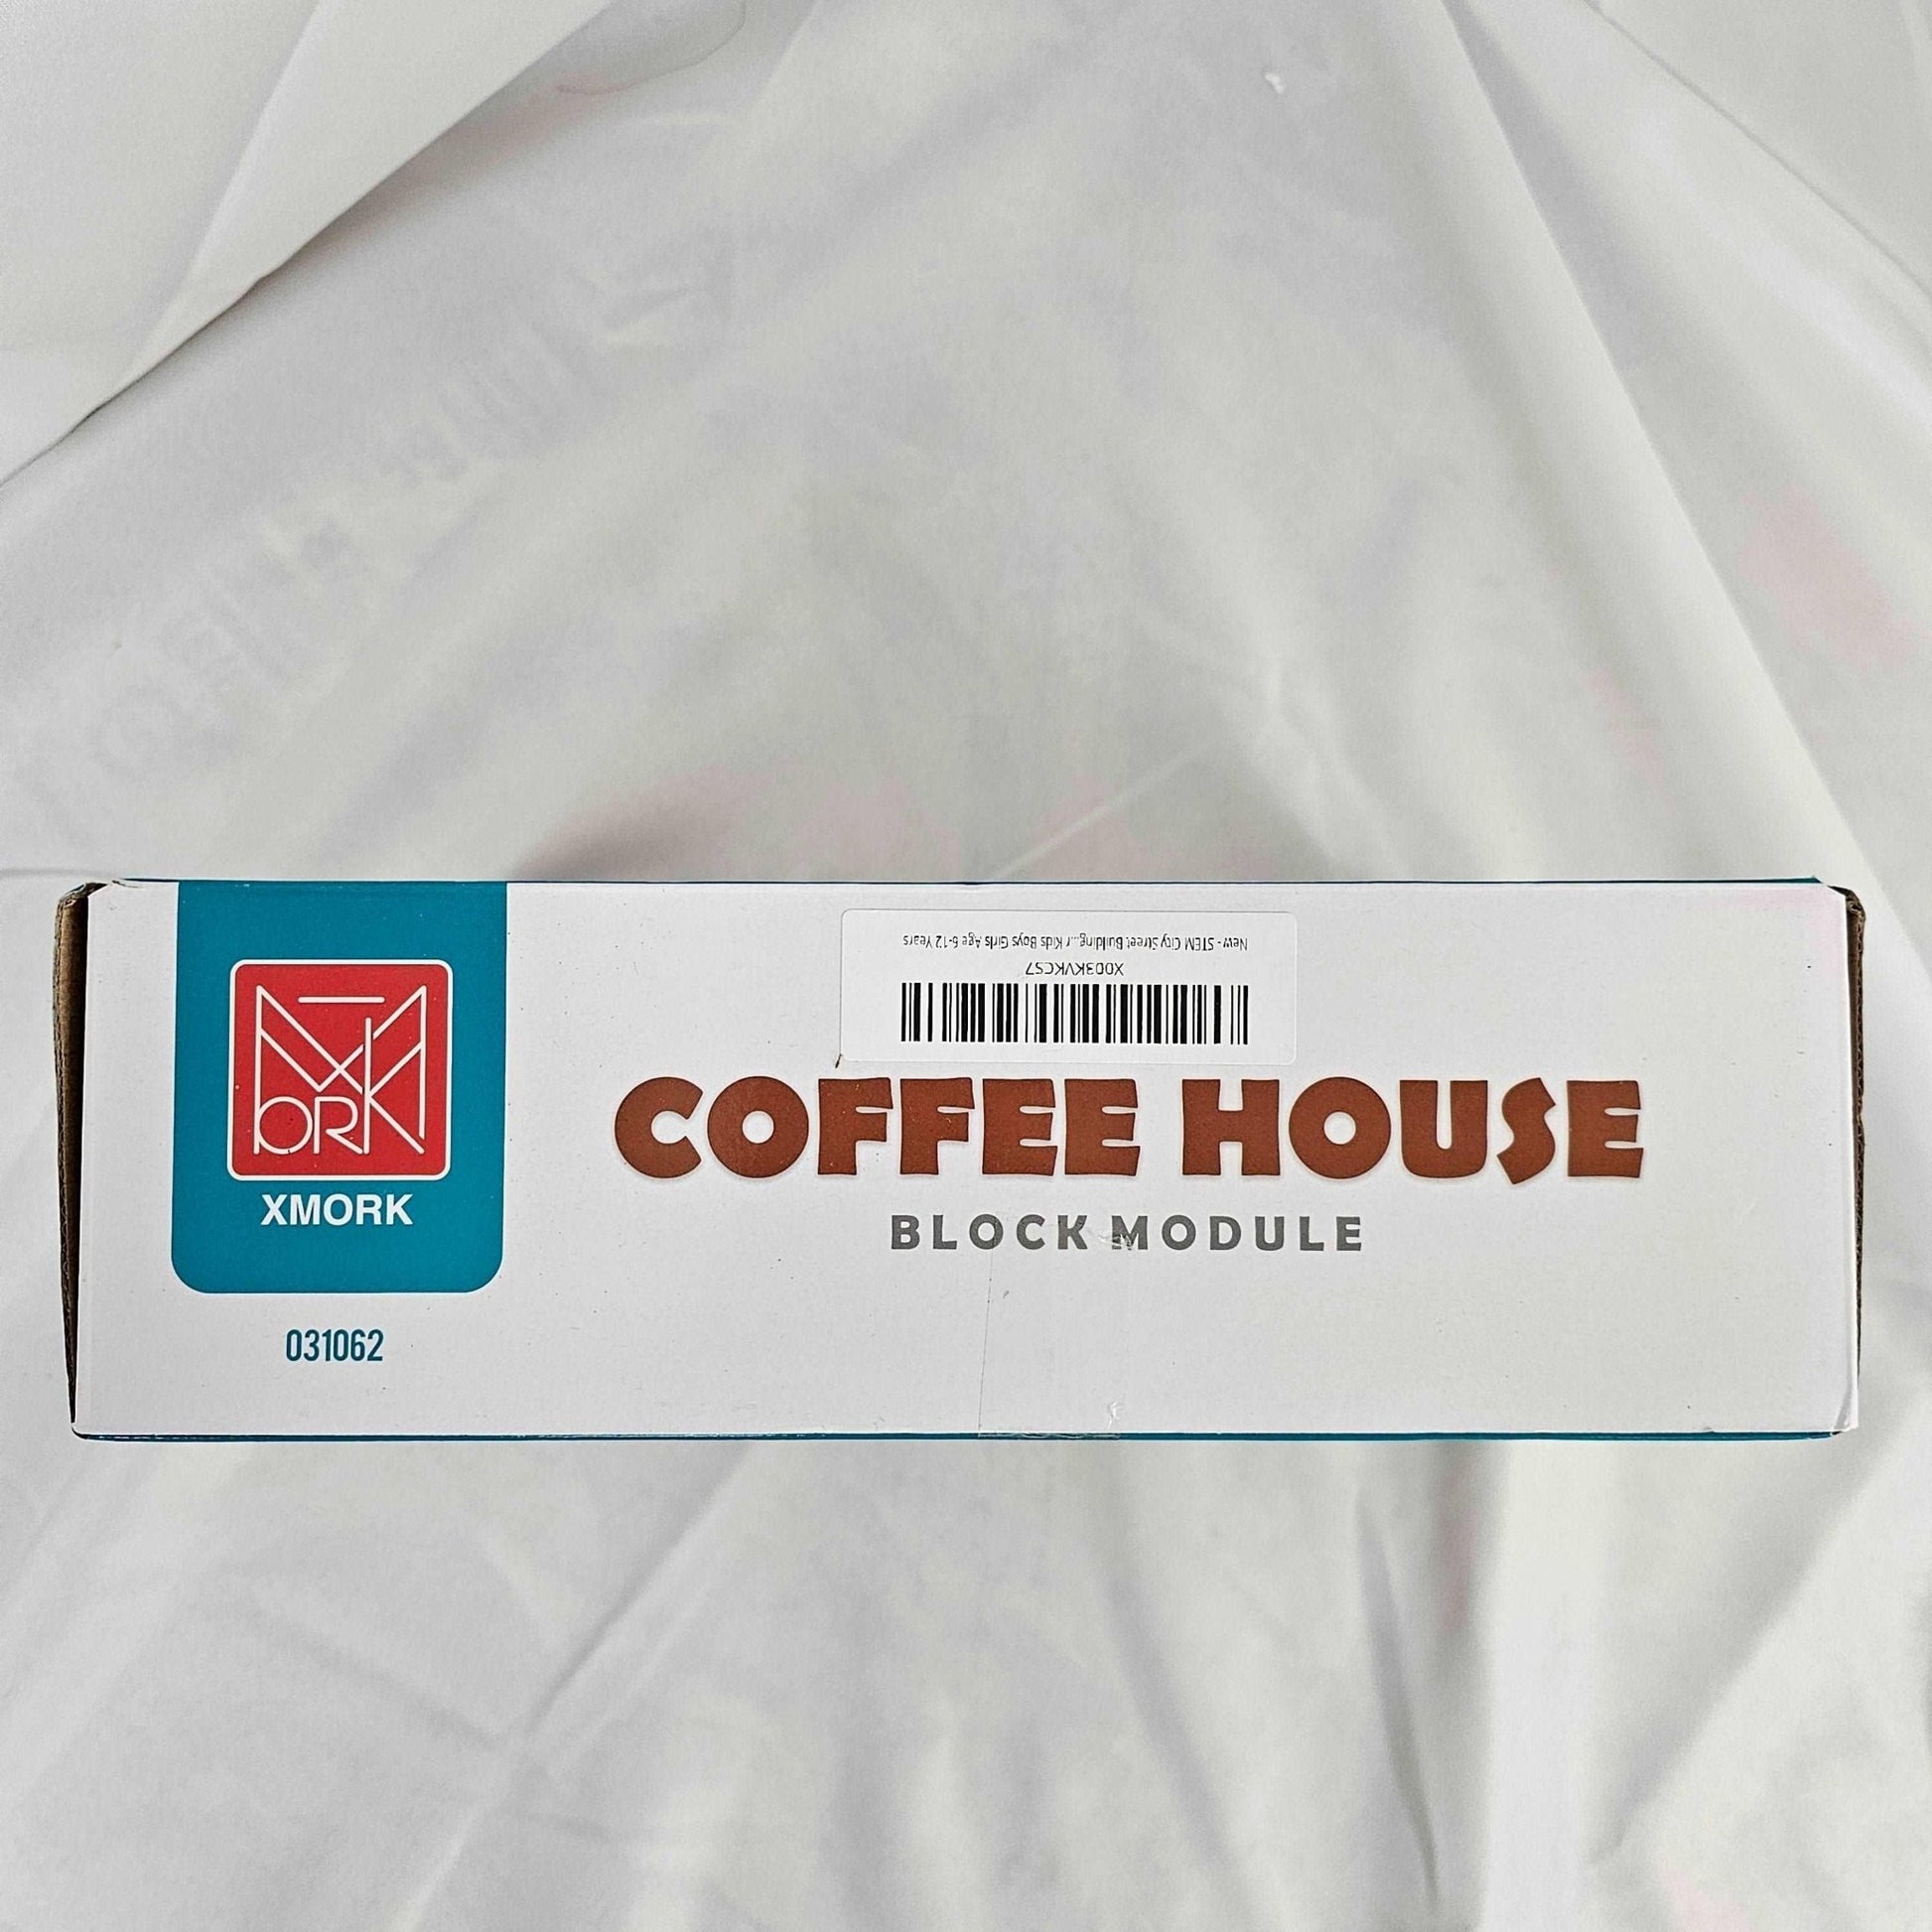 Coffee House Block Module XMork 031062 1512 Pieces - DQ Distribution